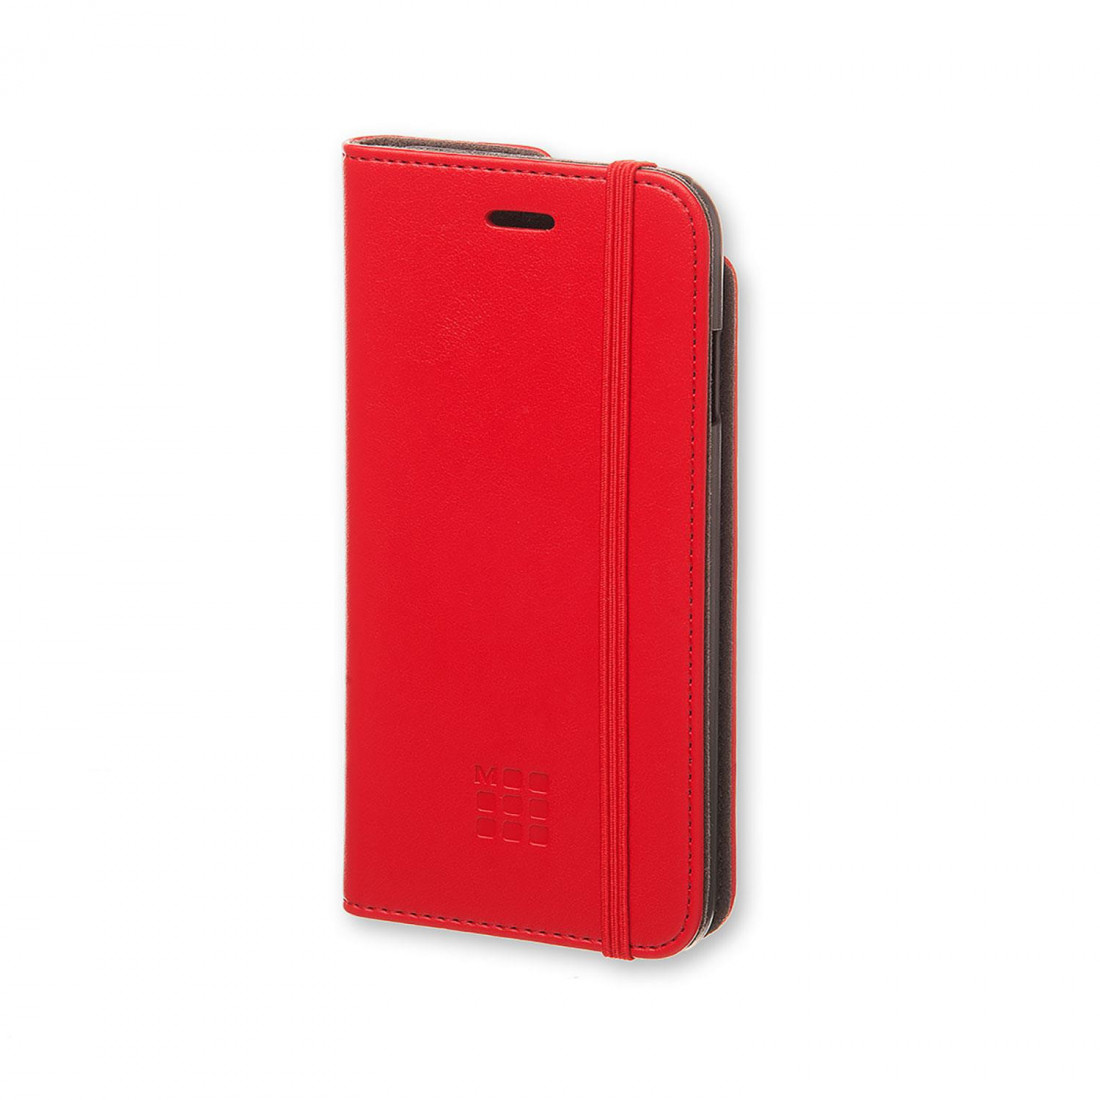 RED CASE BOOK - IPHONE 6/6S MOLESKINE